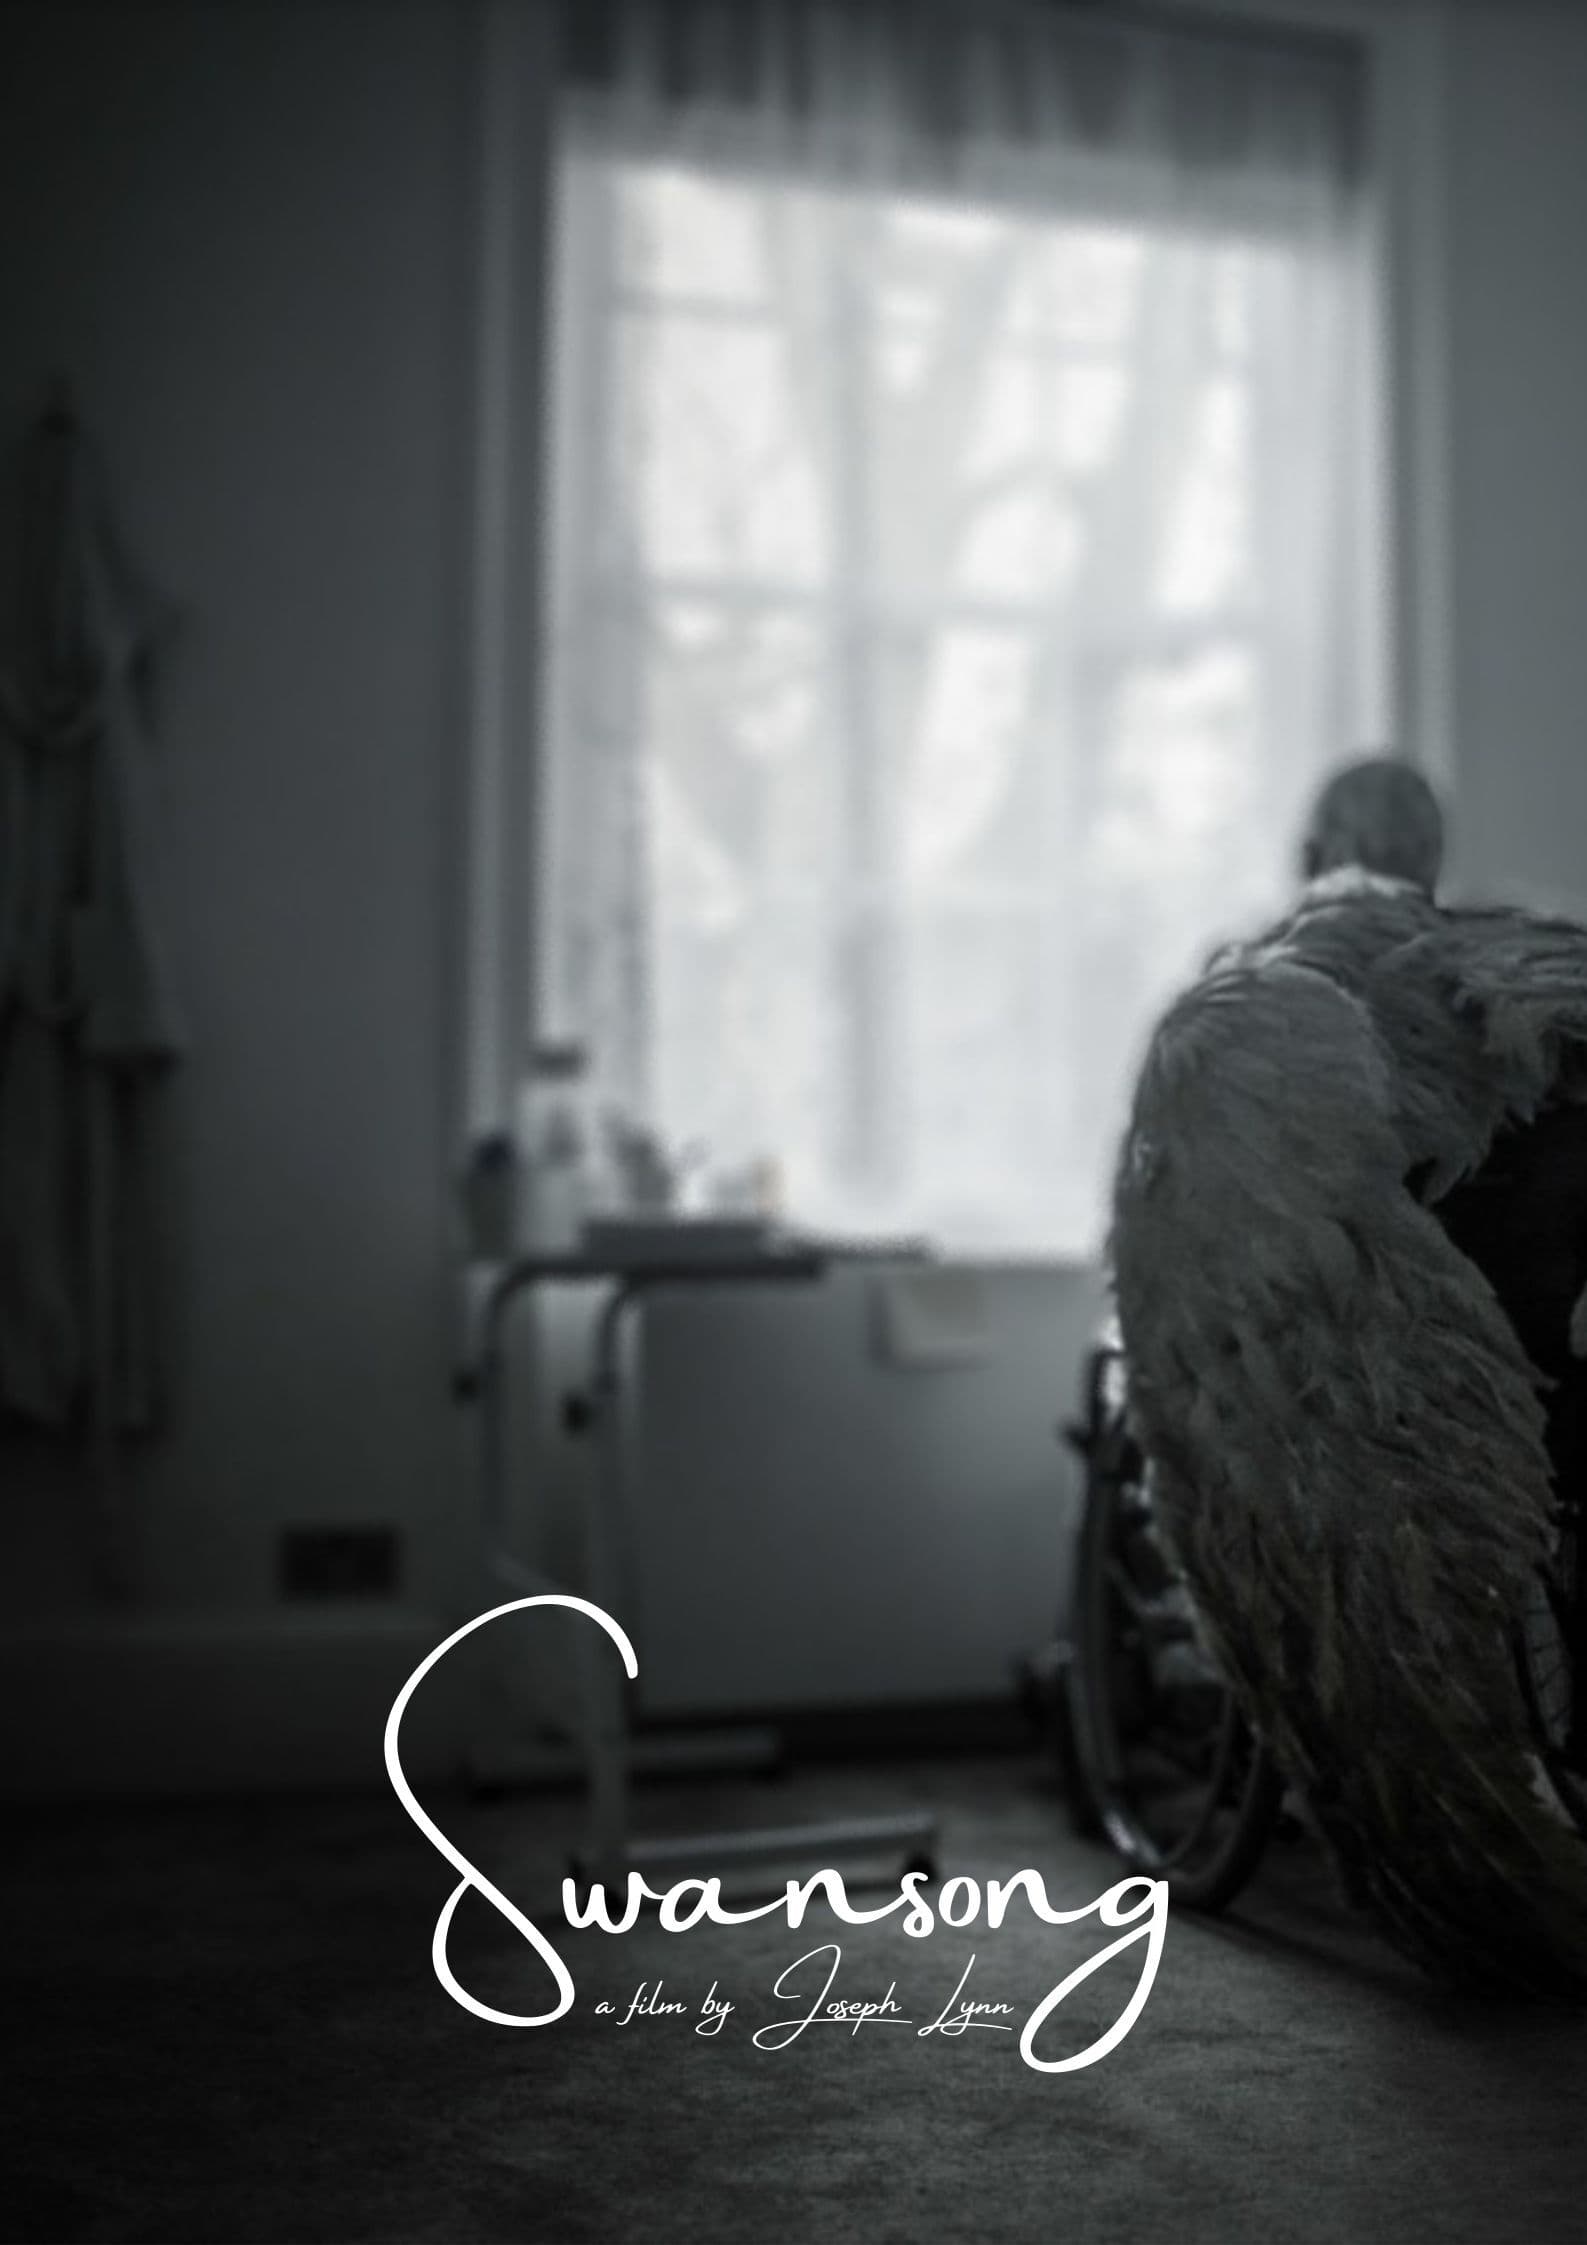 Swansong film